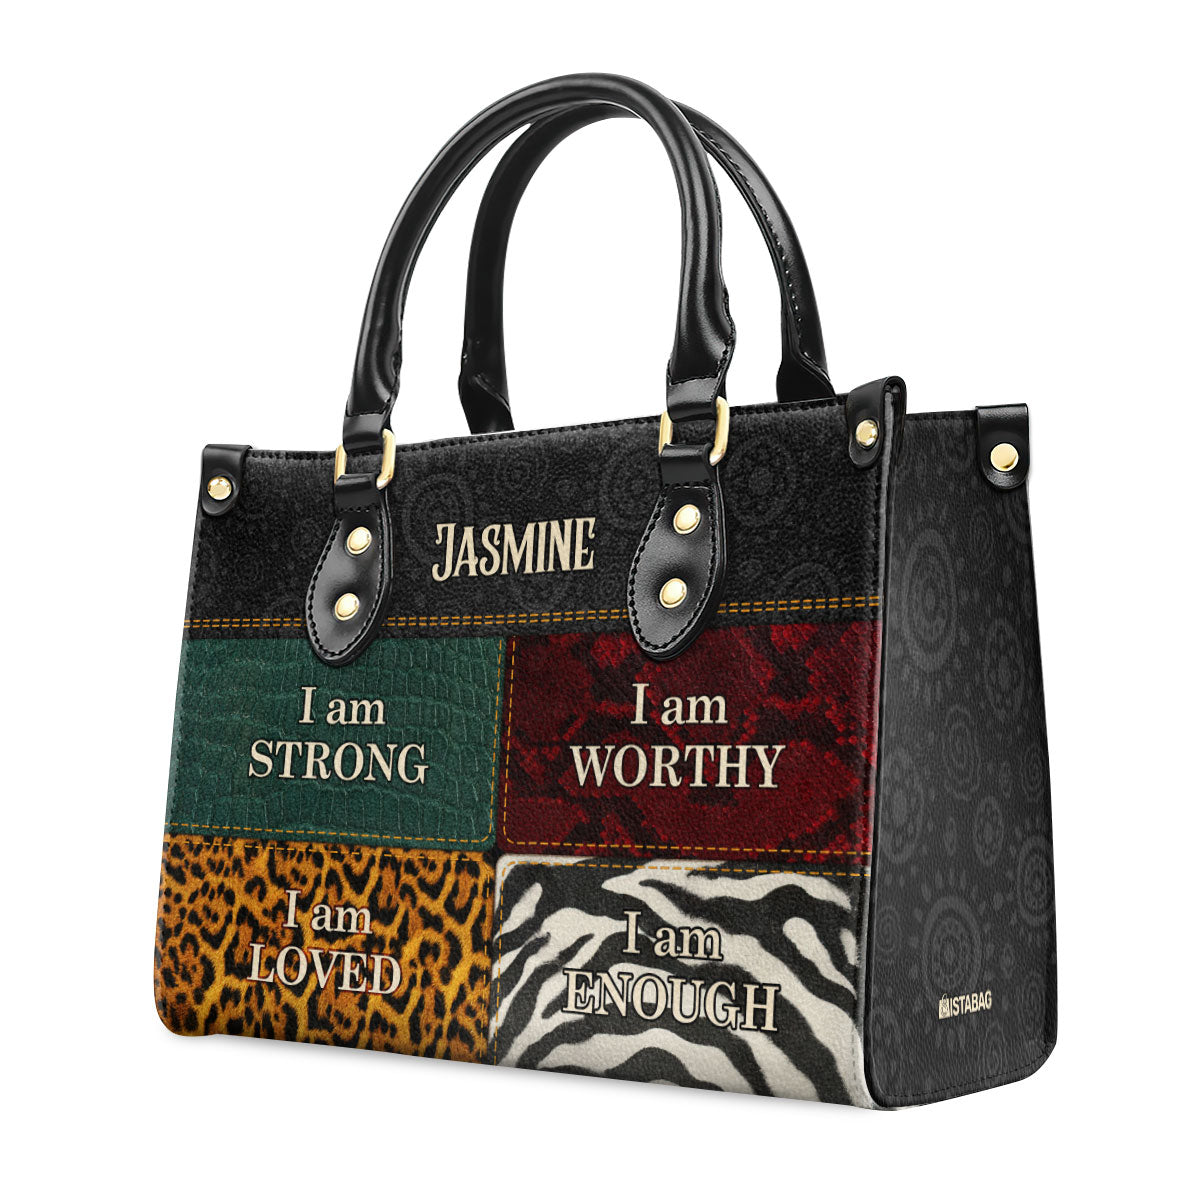 Designer Inspired Handbags. Luxury Replica Handbags: The Epitome